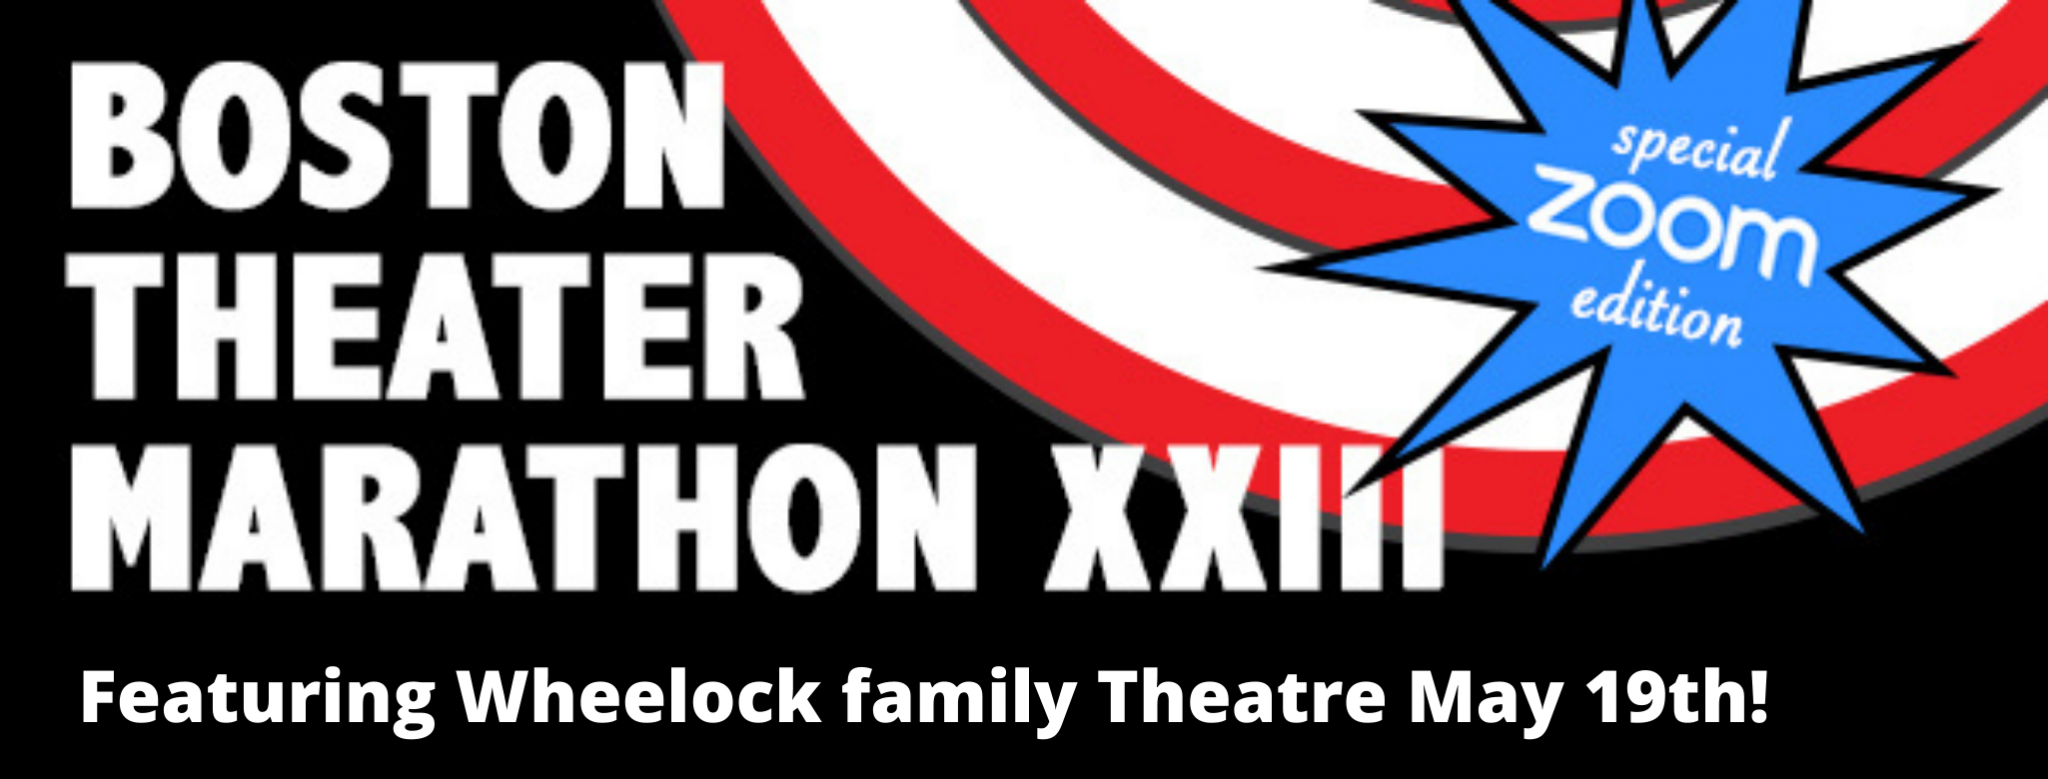 Boston Theater Marathon 2021 Wheelock Family Theatre